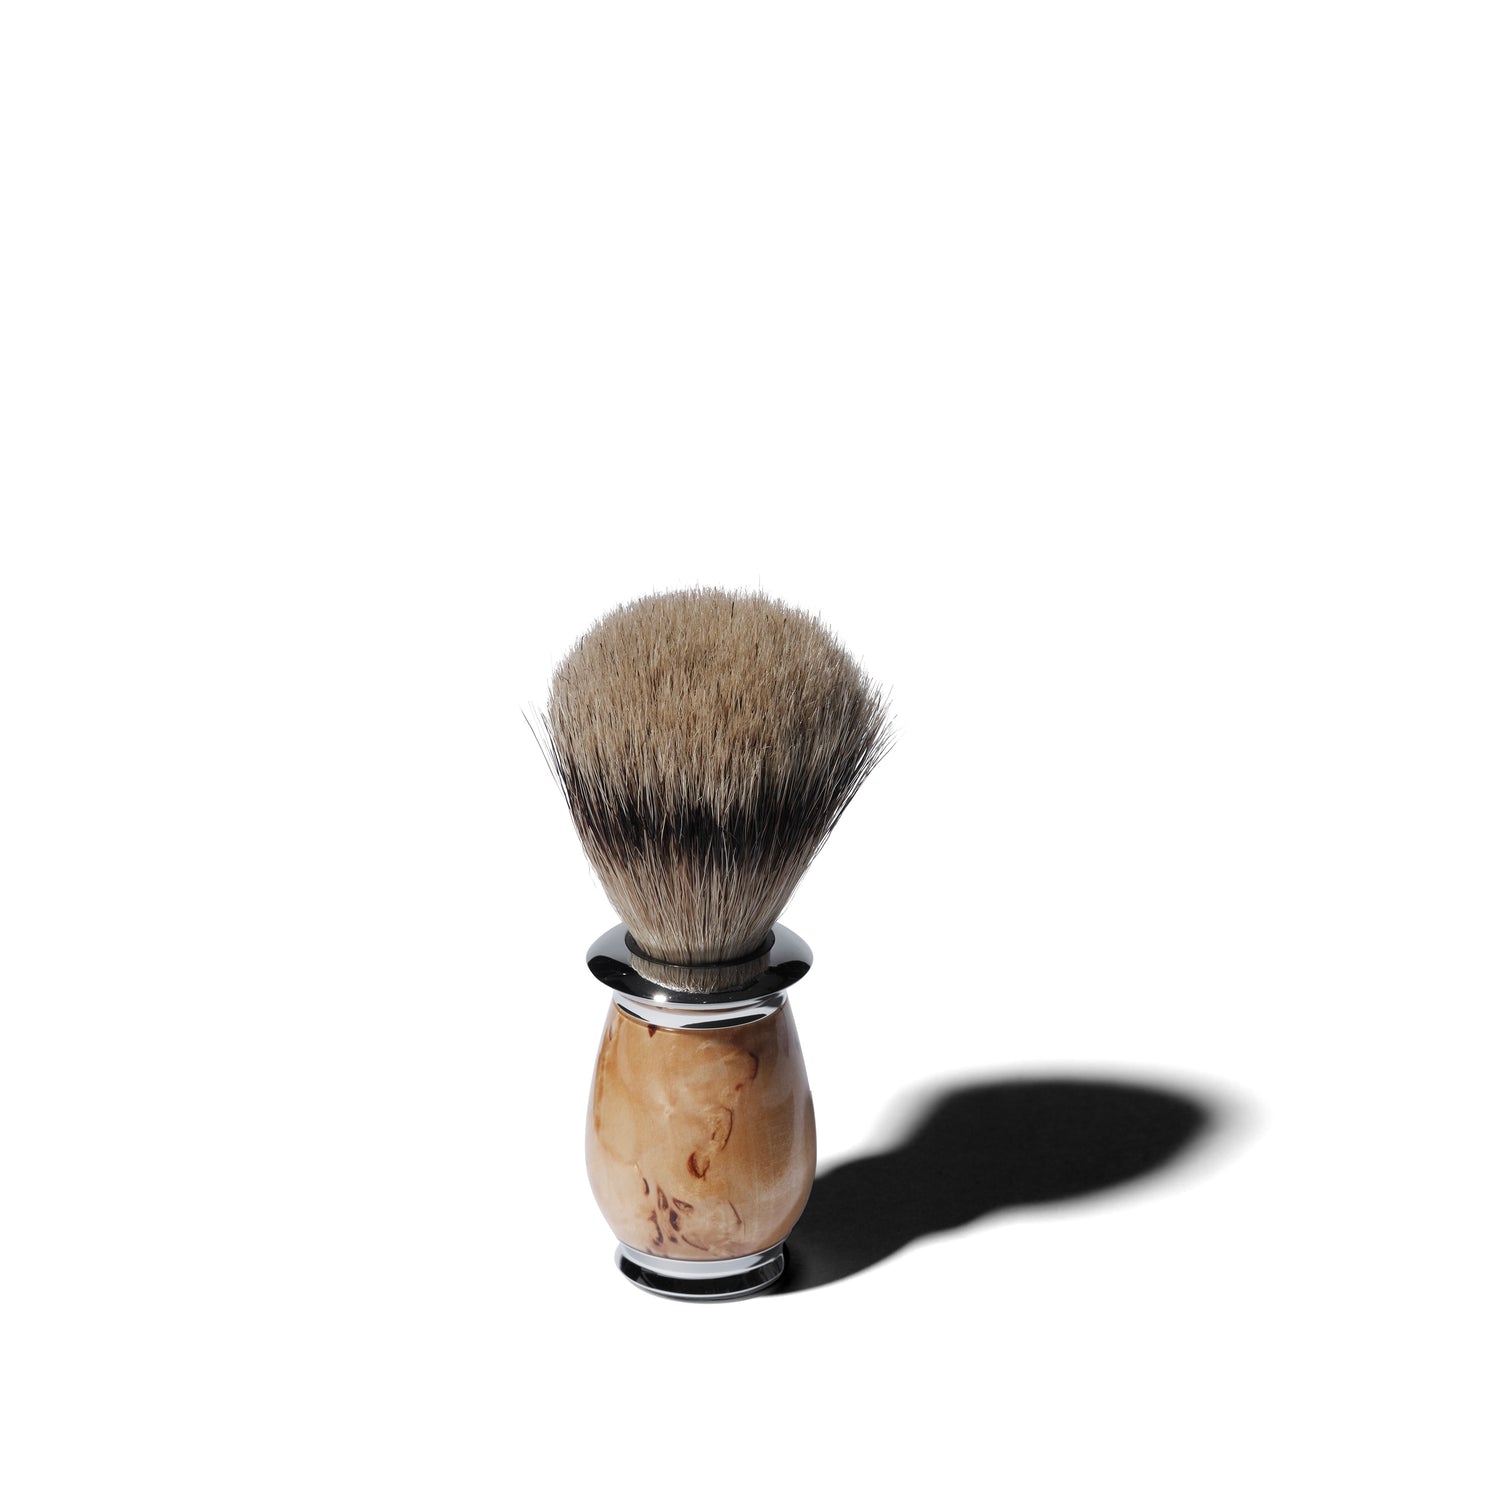 ‘The Purist’ Shaving Brush